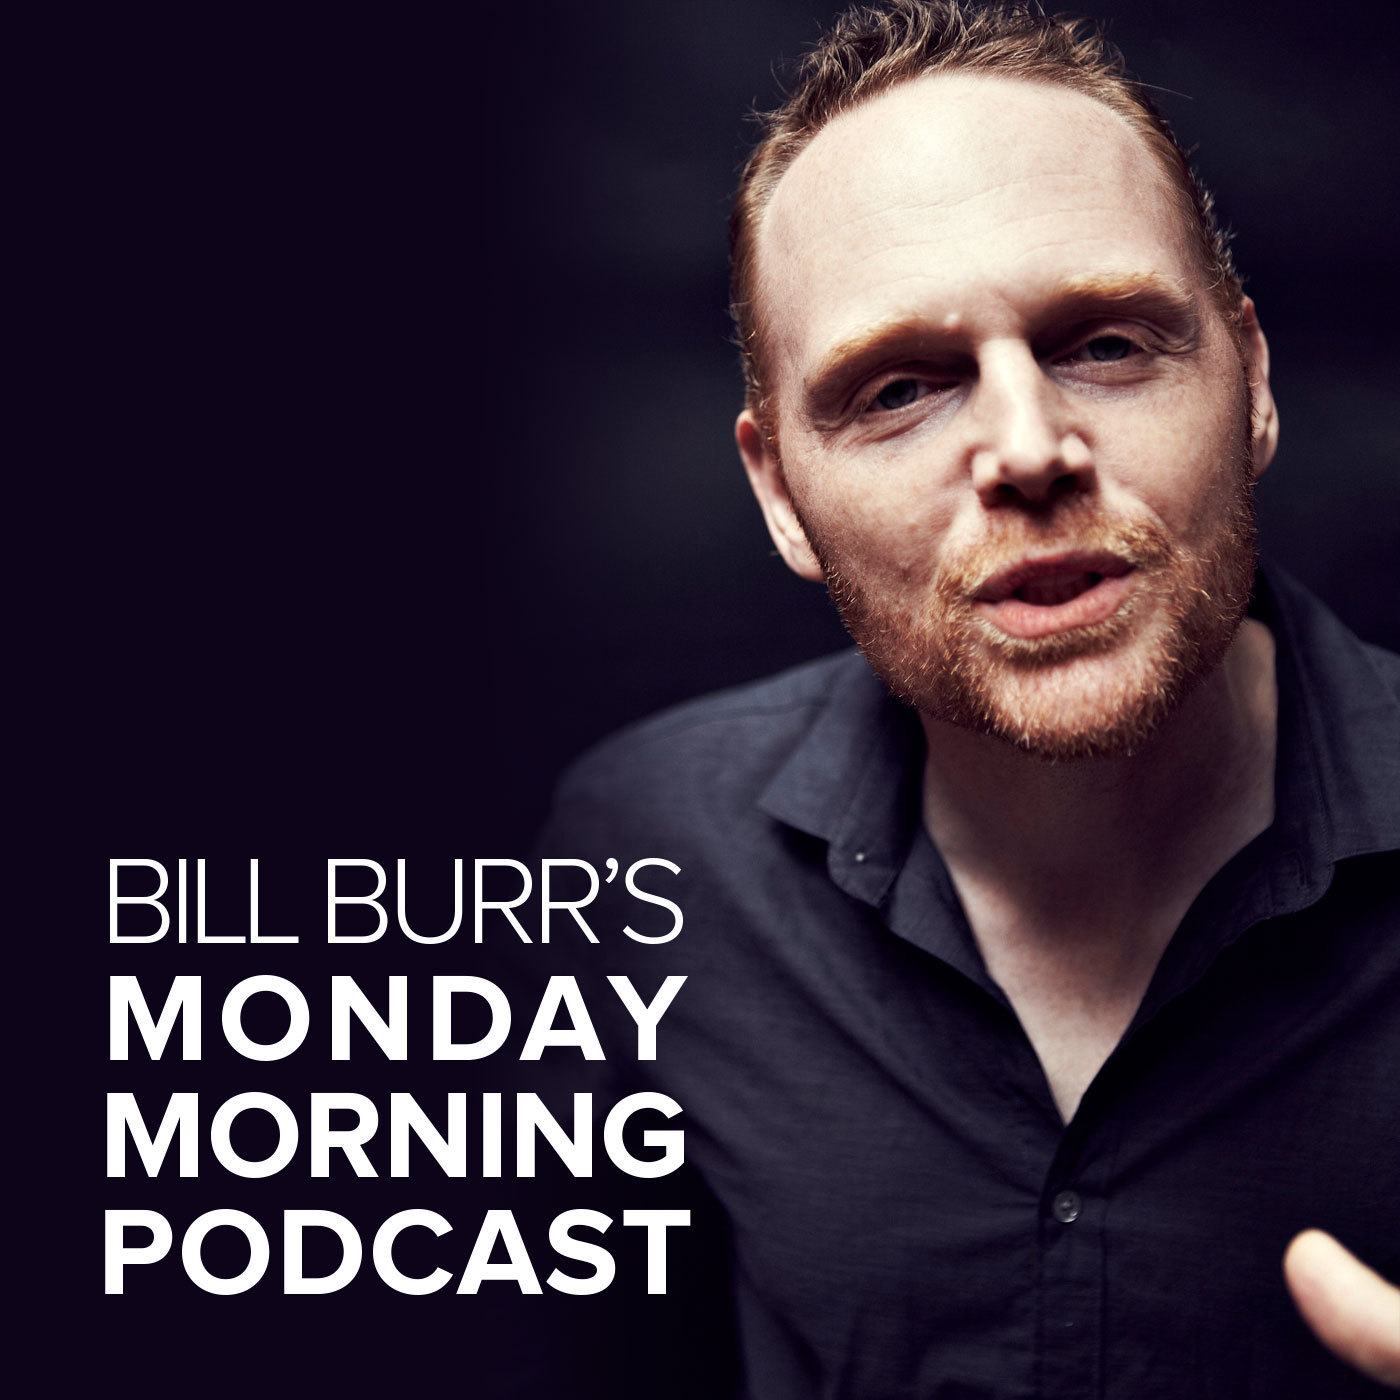 Monday Morning Podcast 4-25-16